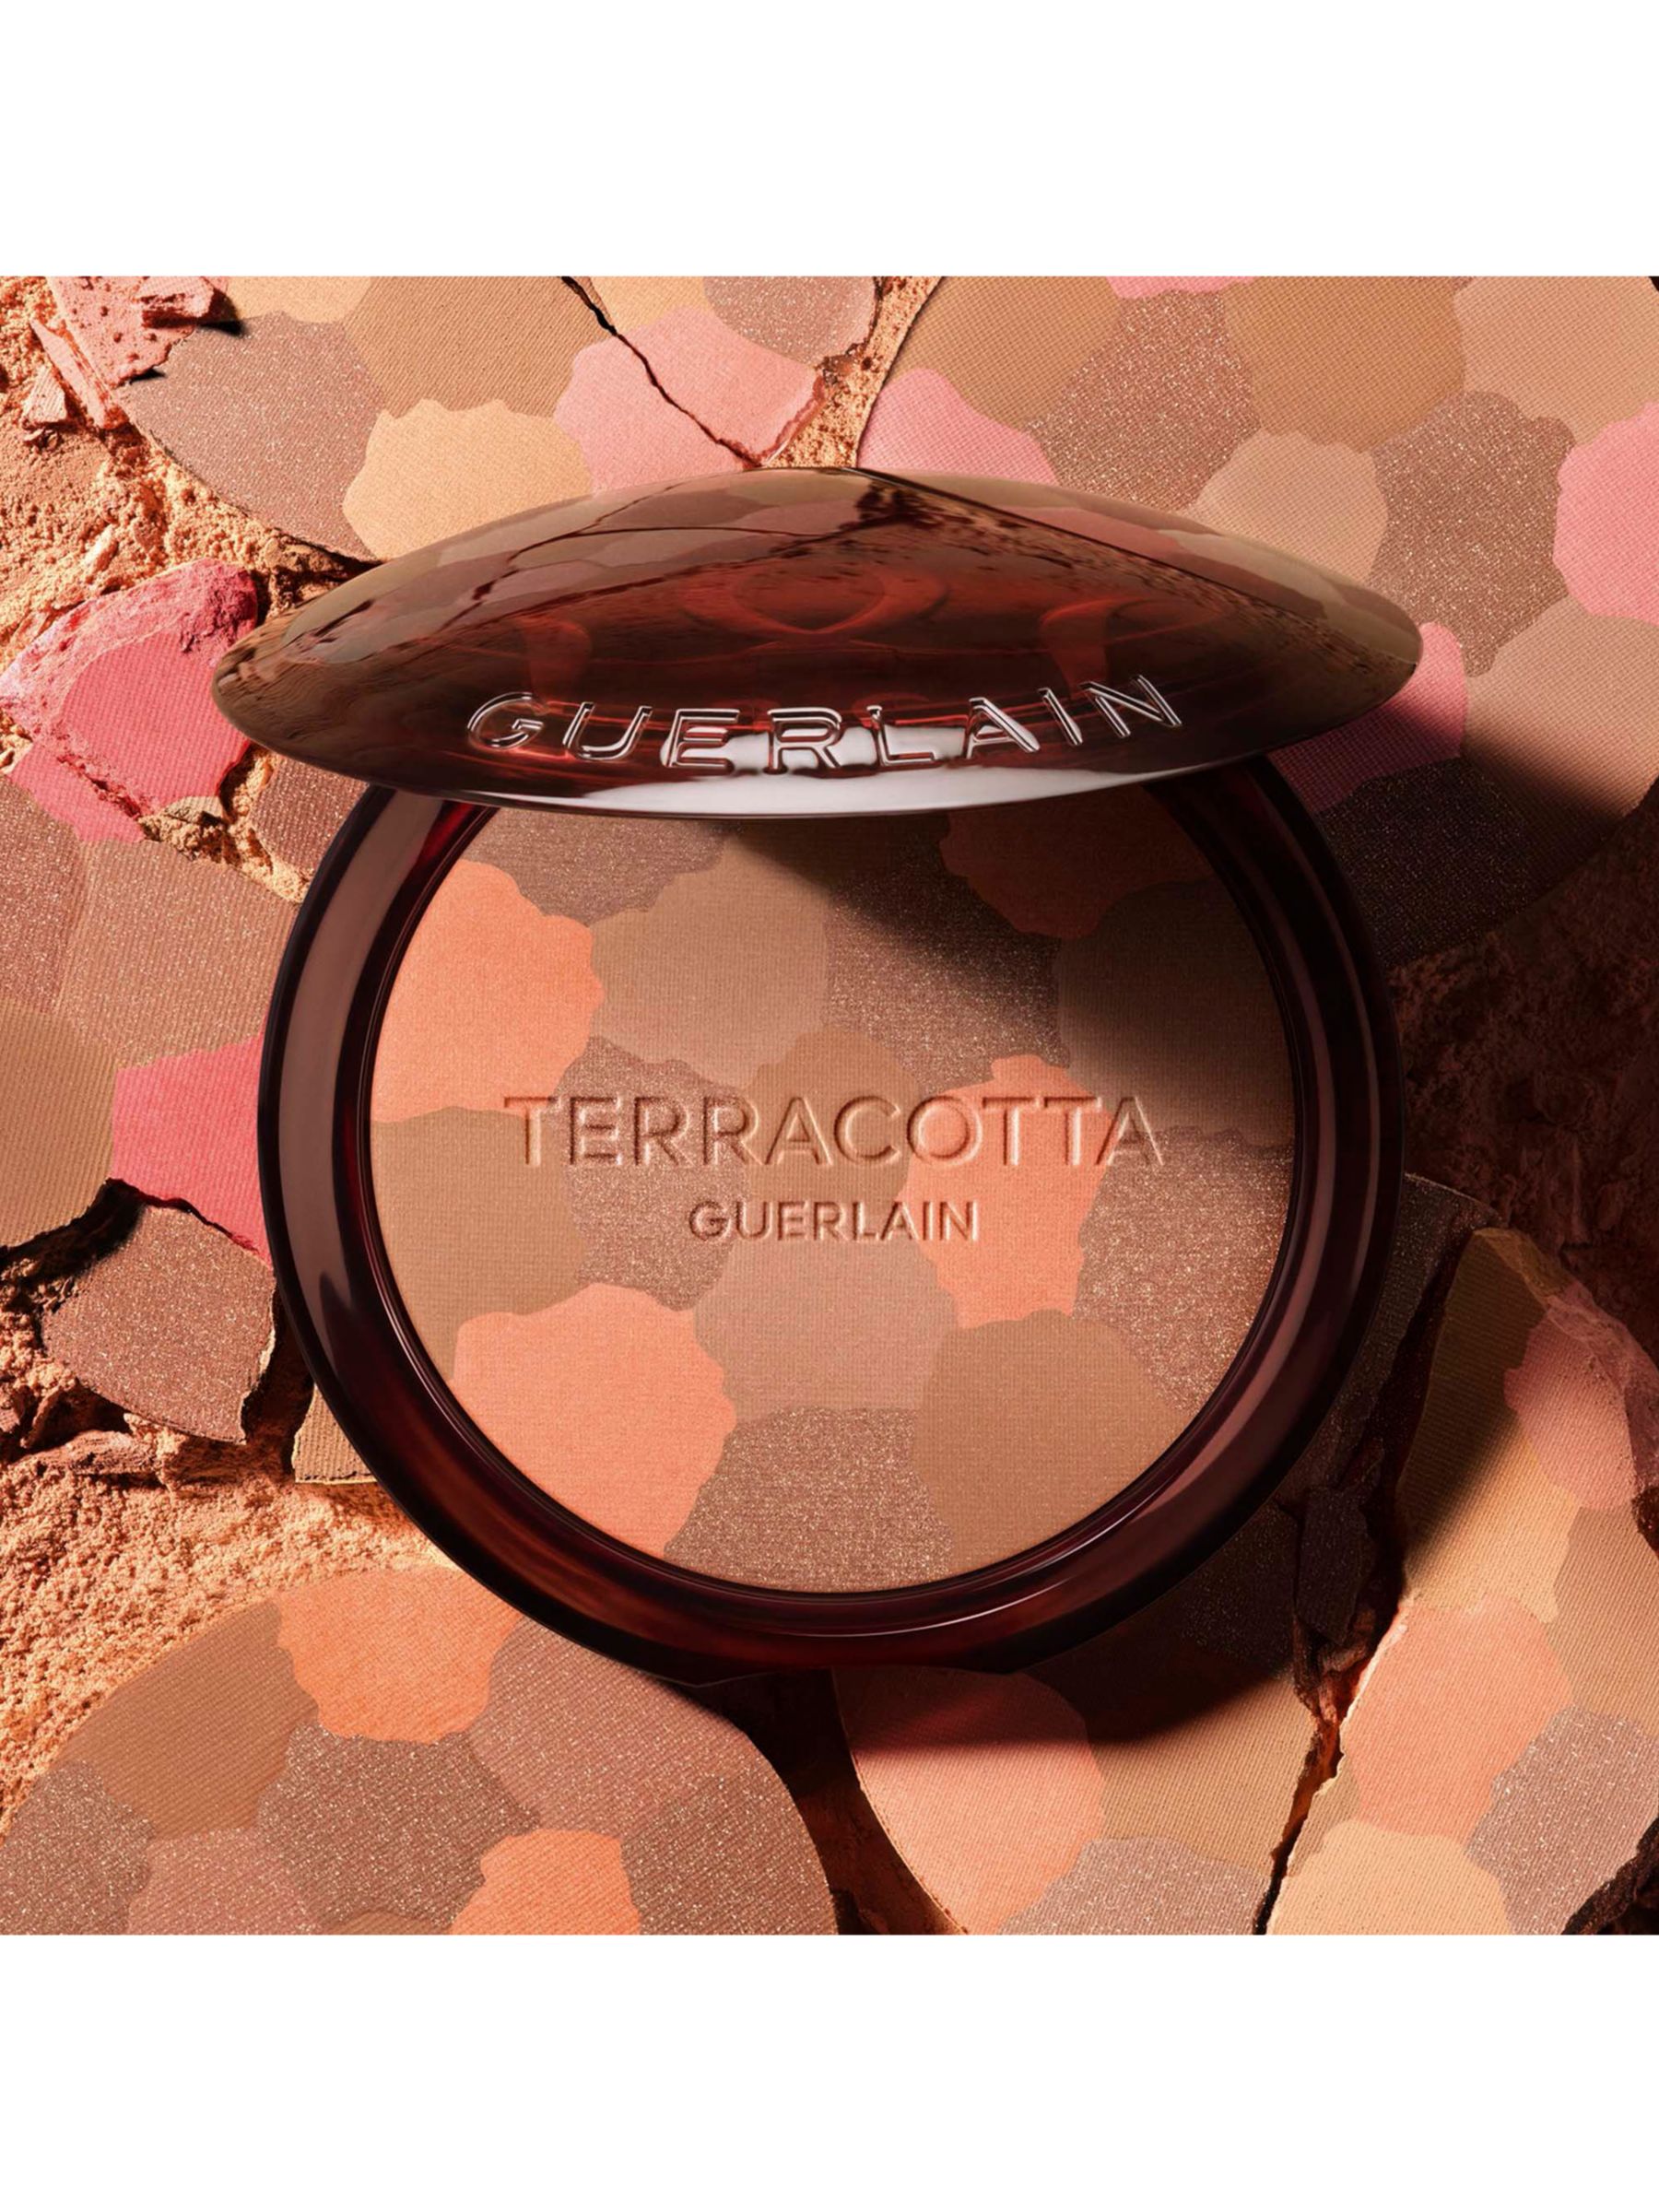 Guerlain Terracotta Light The Sun-Kissed Natural Healthy Glow Powder, 00 Light Cool 7